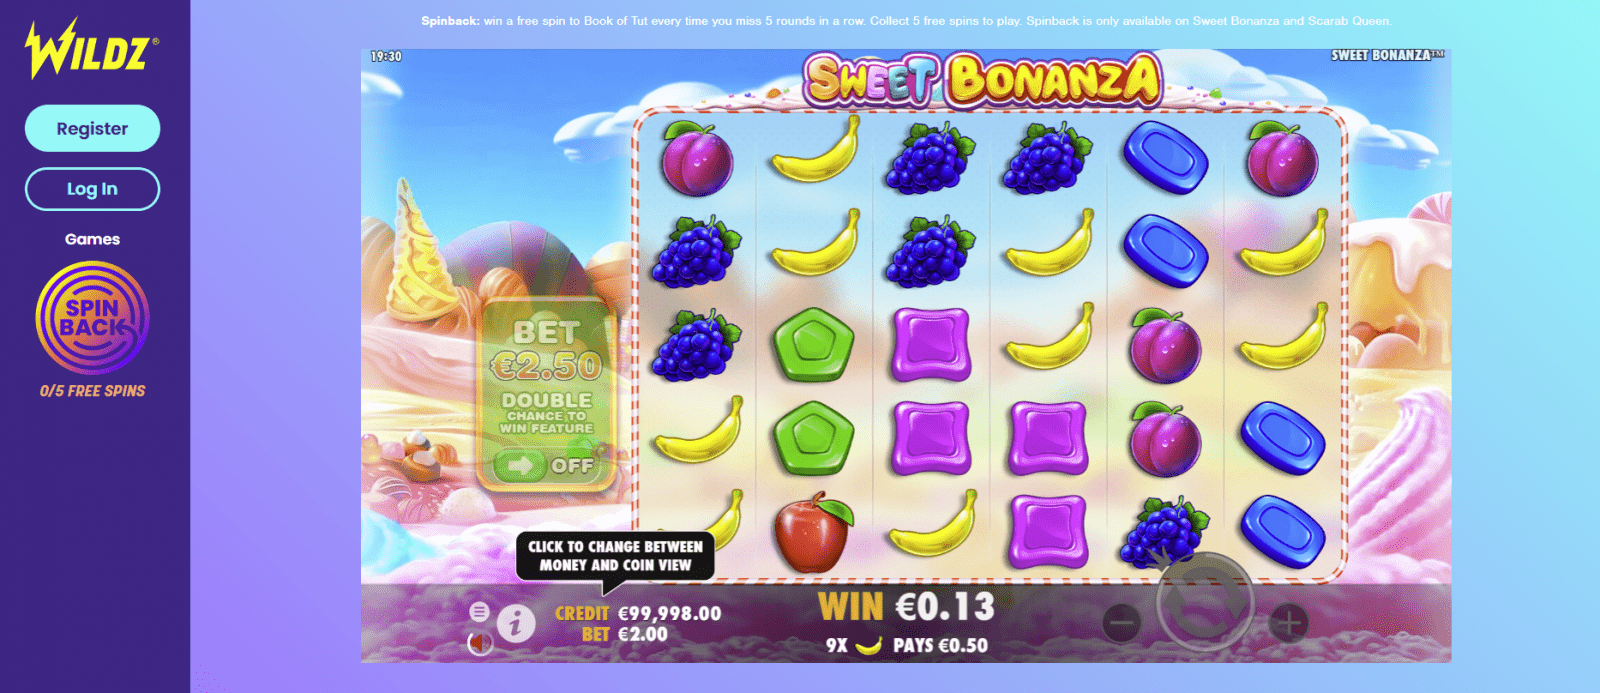 Sweet Bonanza Wildz Casino